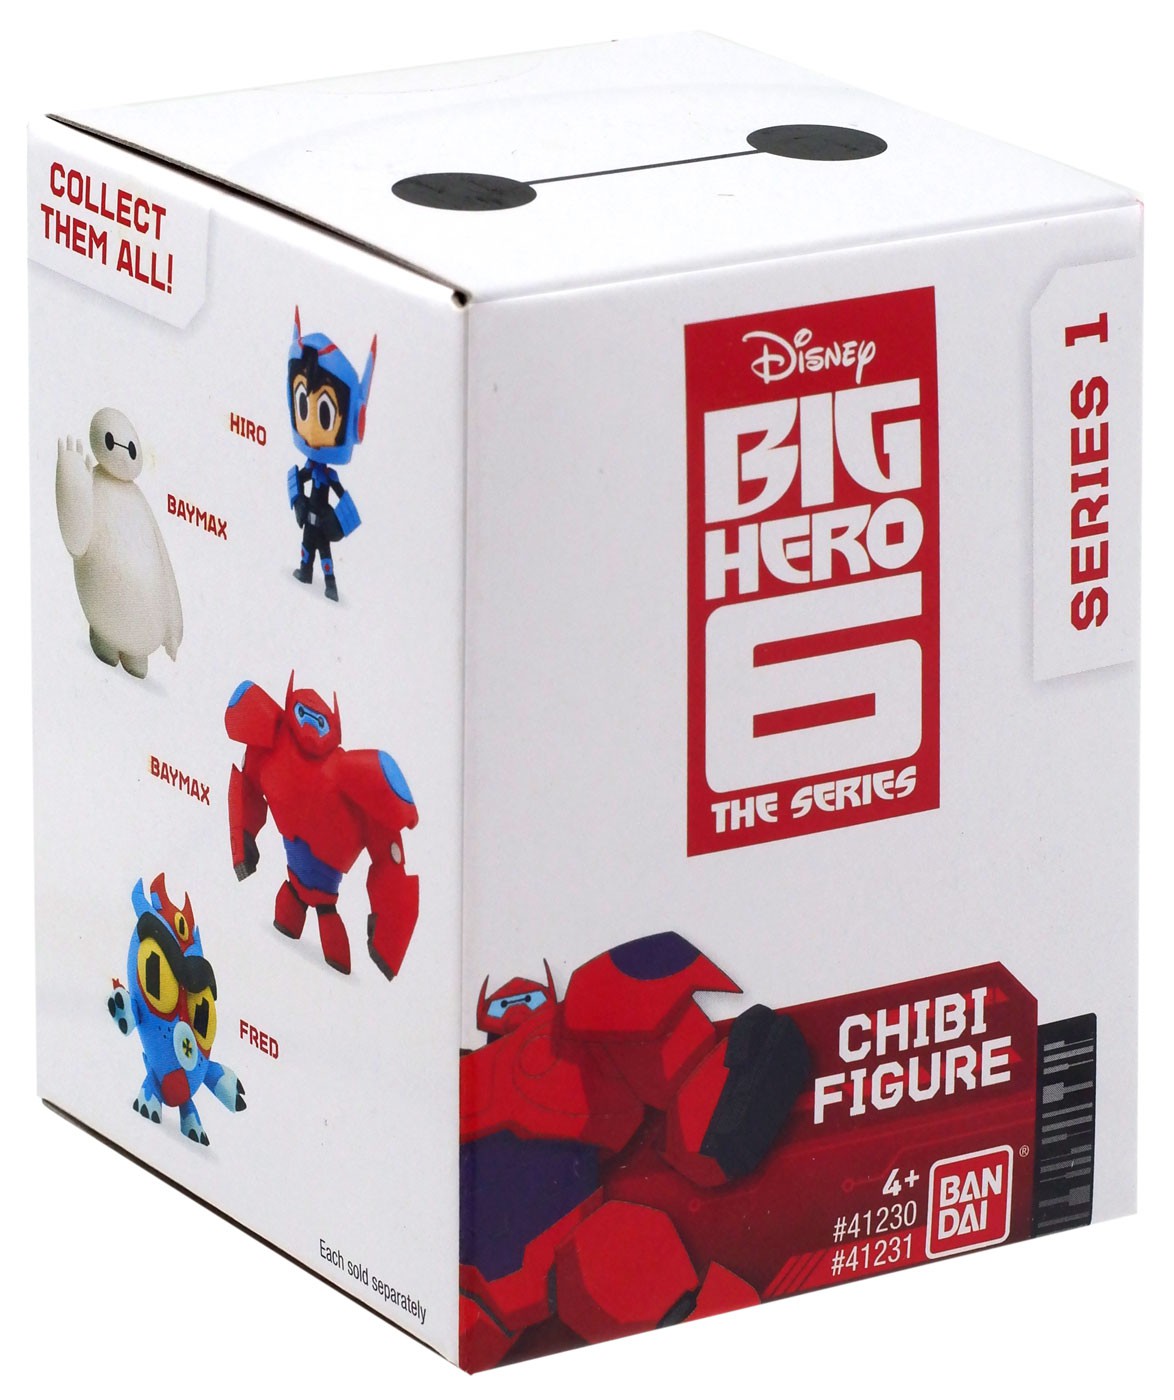 Disney Big Hero 6: The Series - Wave 1 Wave 1 Chibi Mini Figure Blind Mini Box (1 Figure) - image 1 of 2